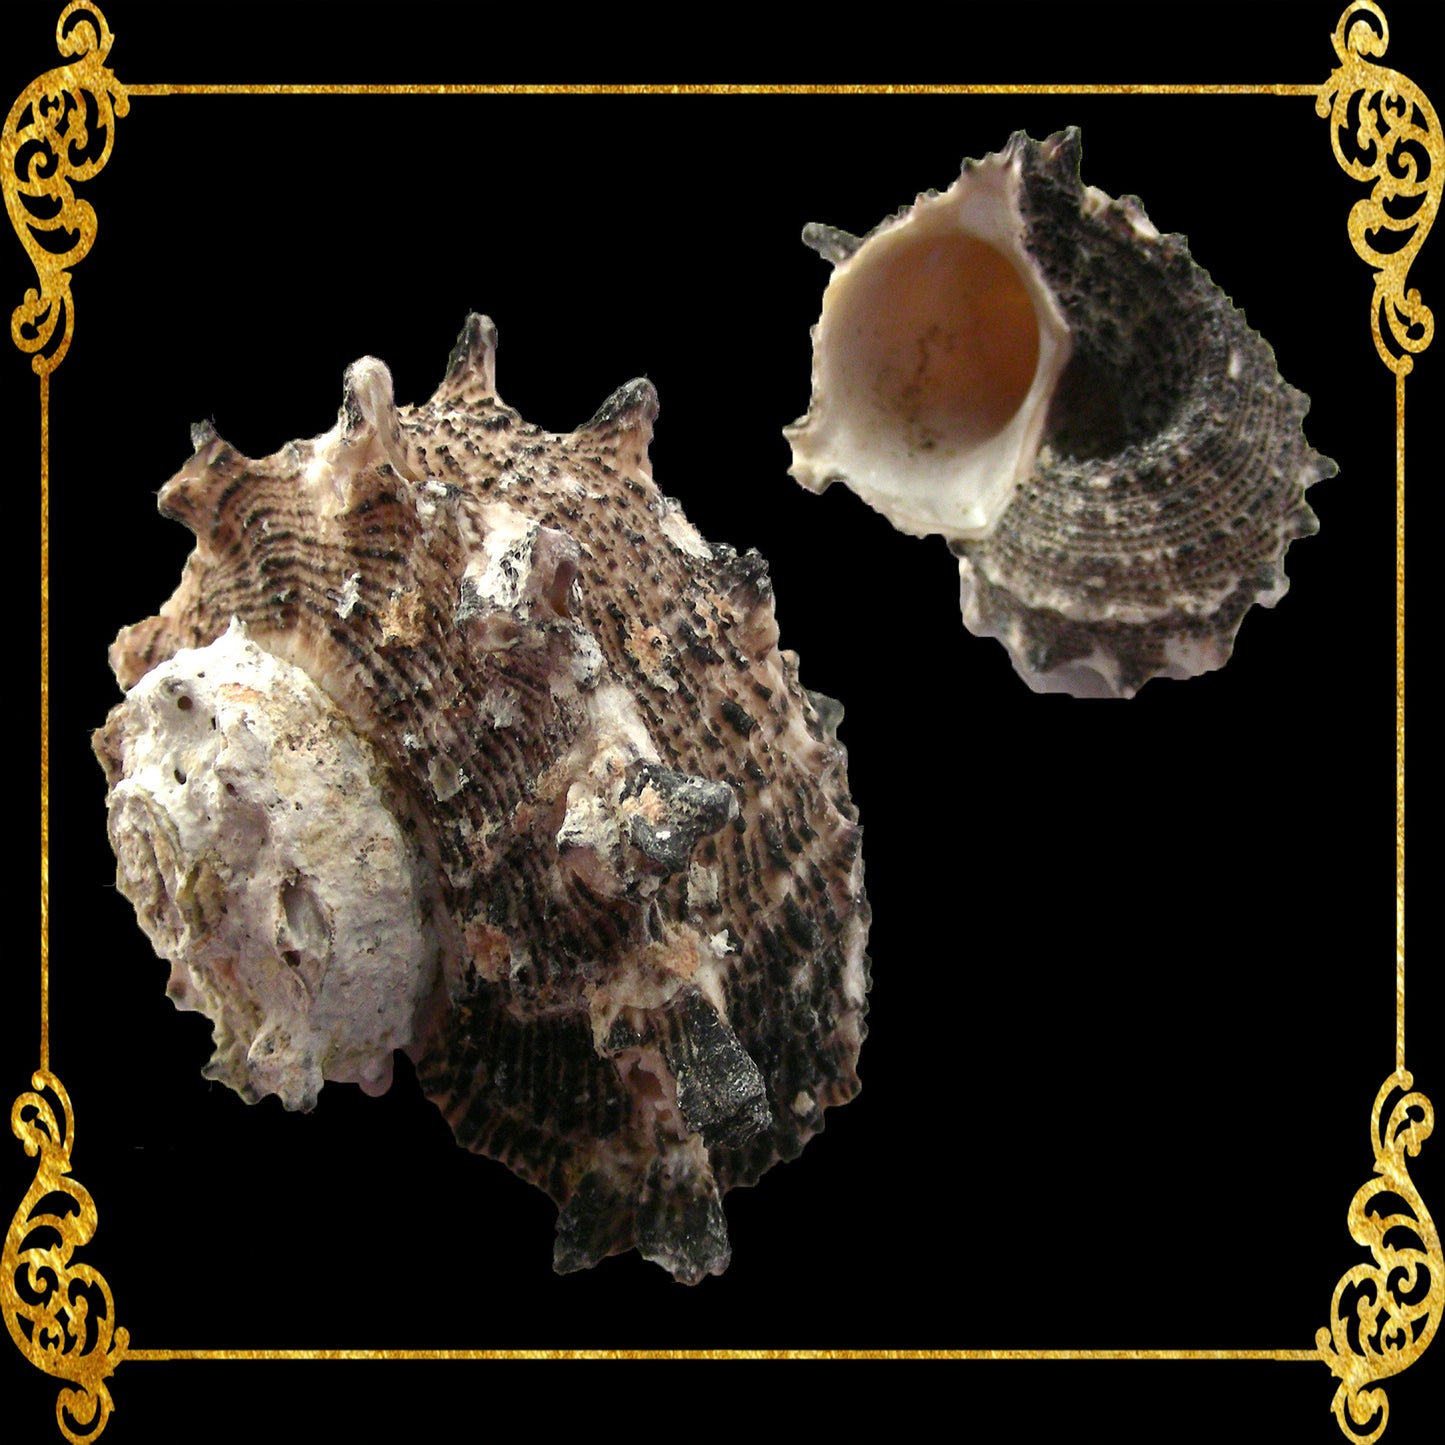 1 Kilo | Angaria | Imperial Delphinula | Seashells | Sea shells